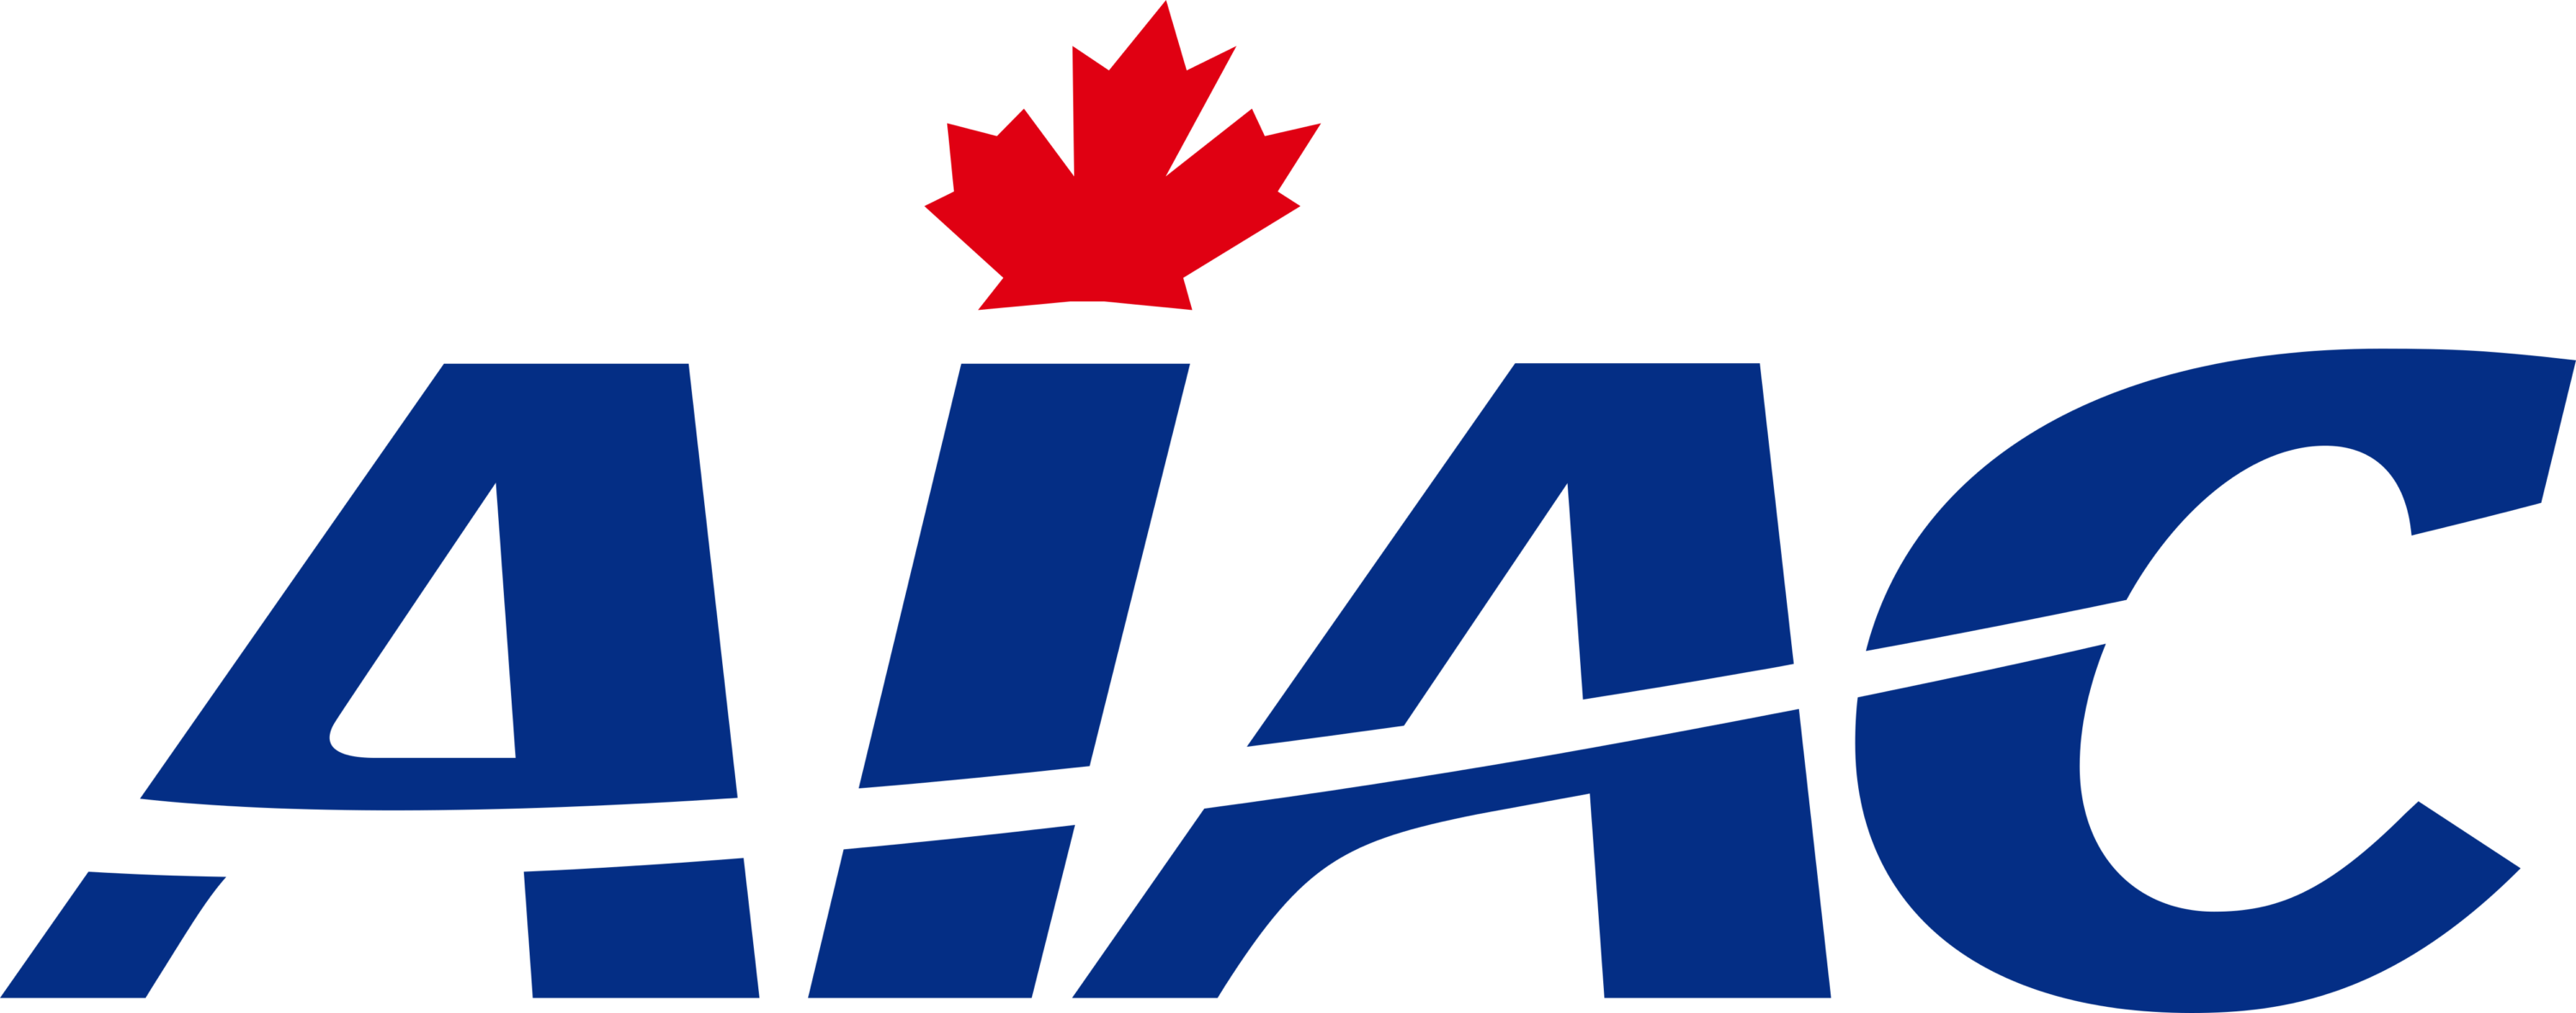 Aerospace Industries Association of Canada Logo